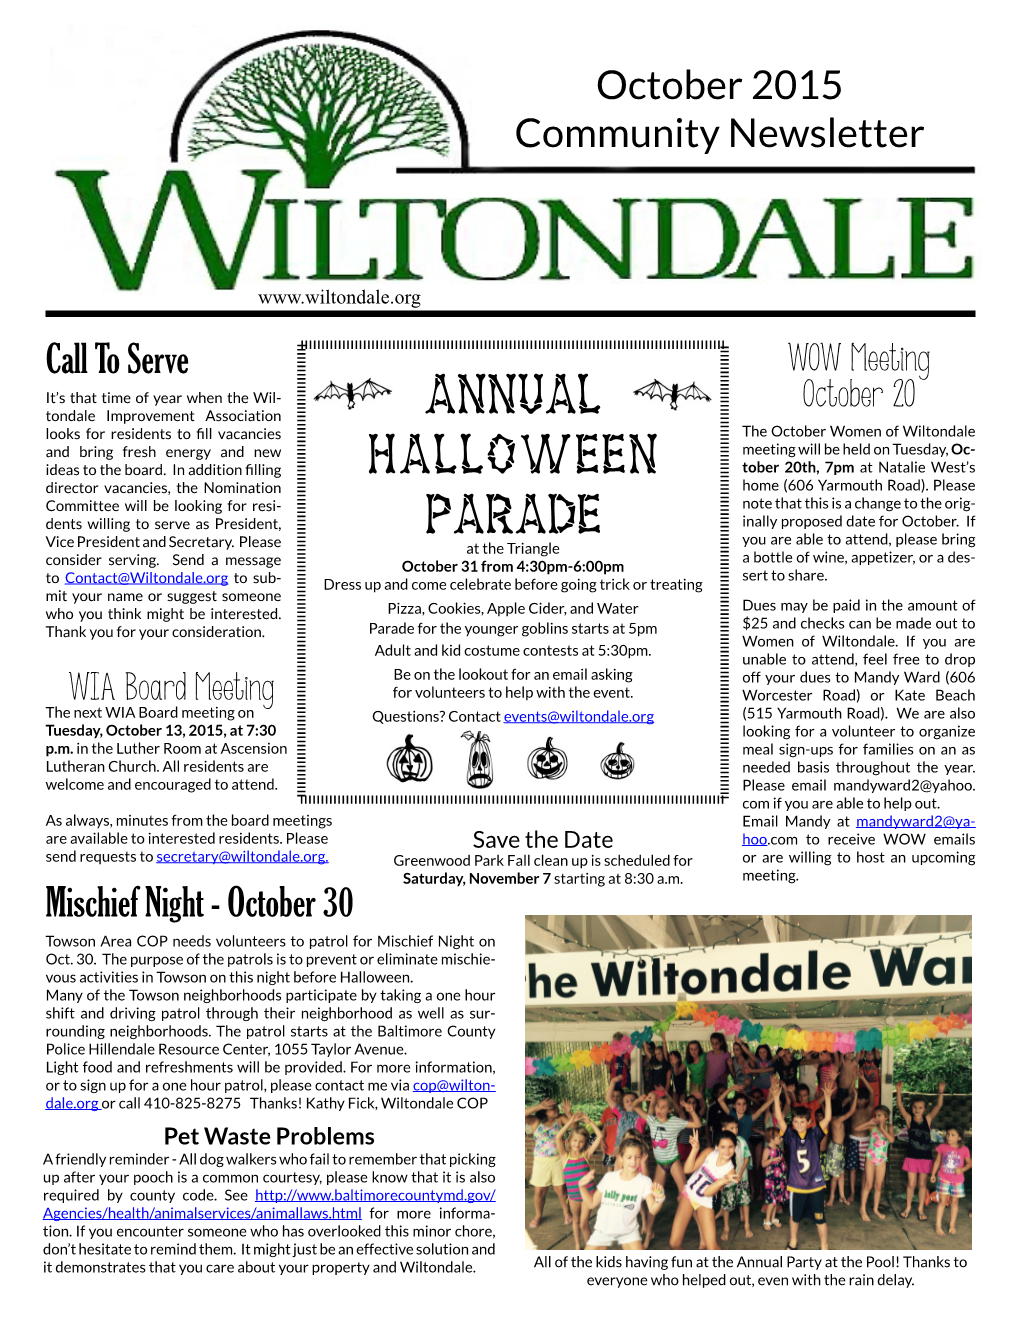 October 2015 Community Newsletter Annual Halloween Parade Mischief Night